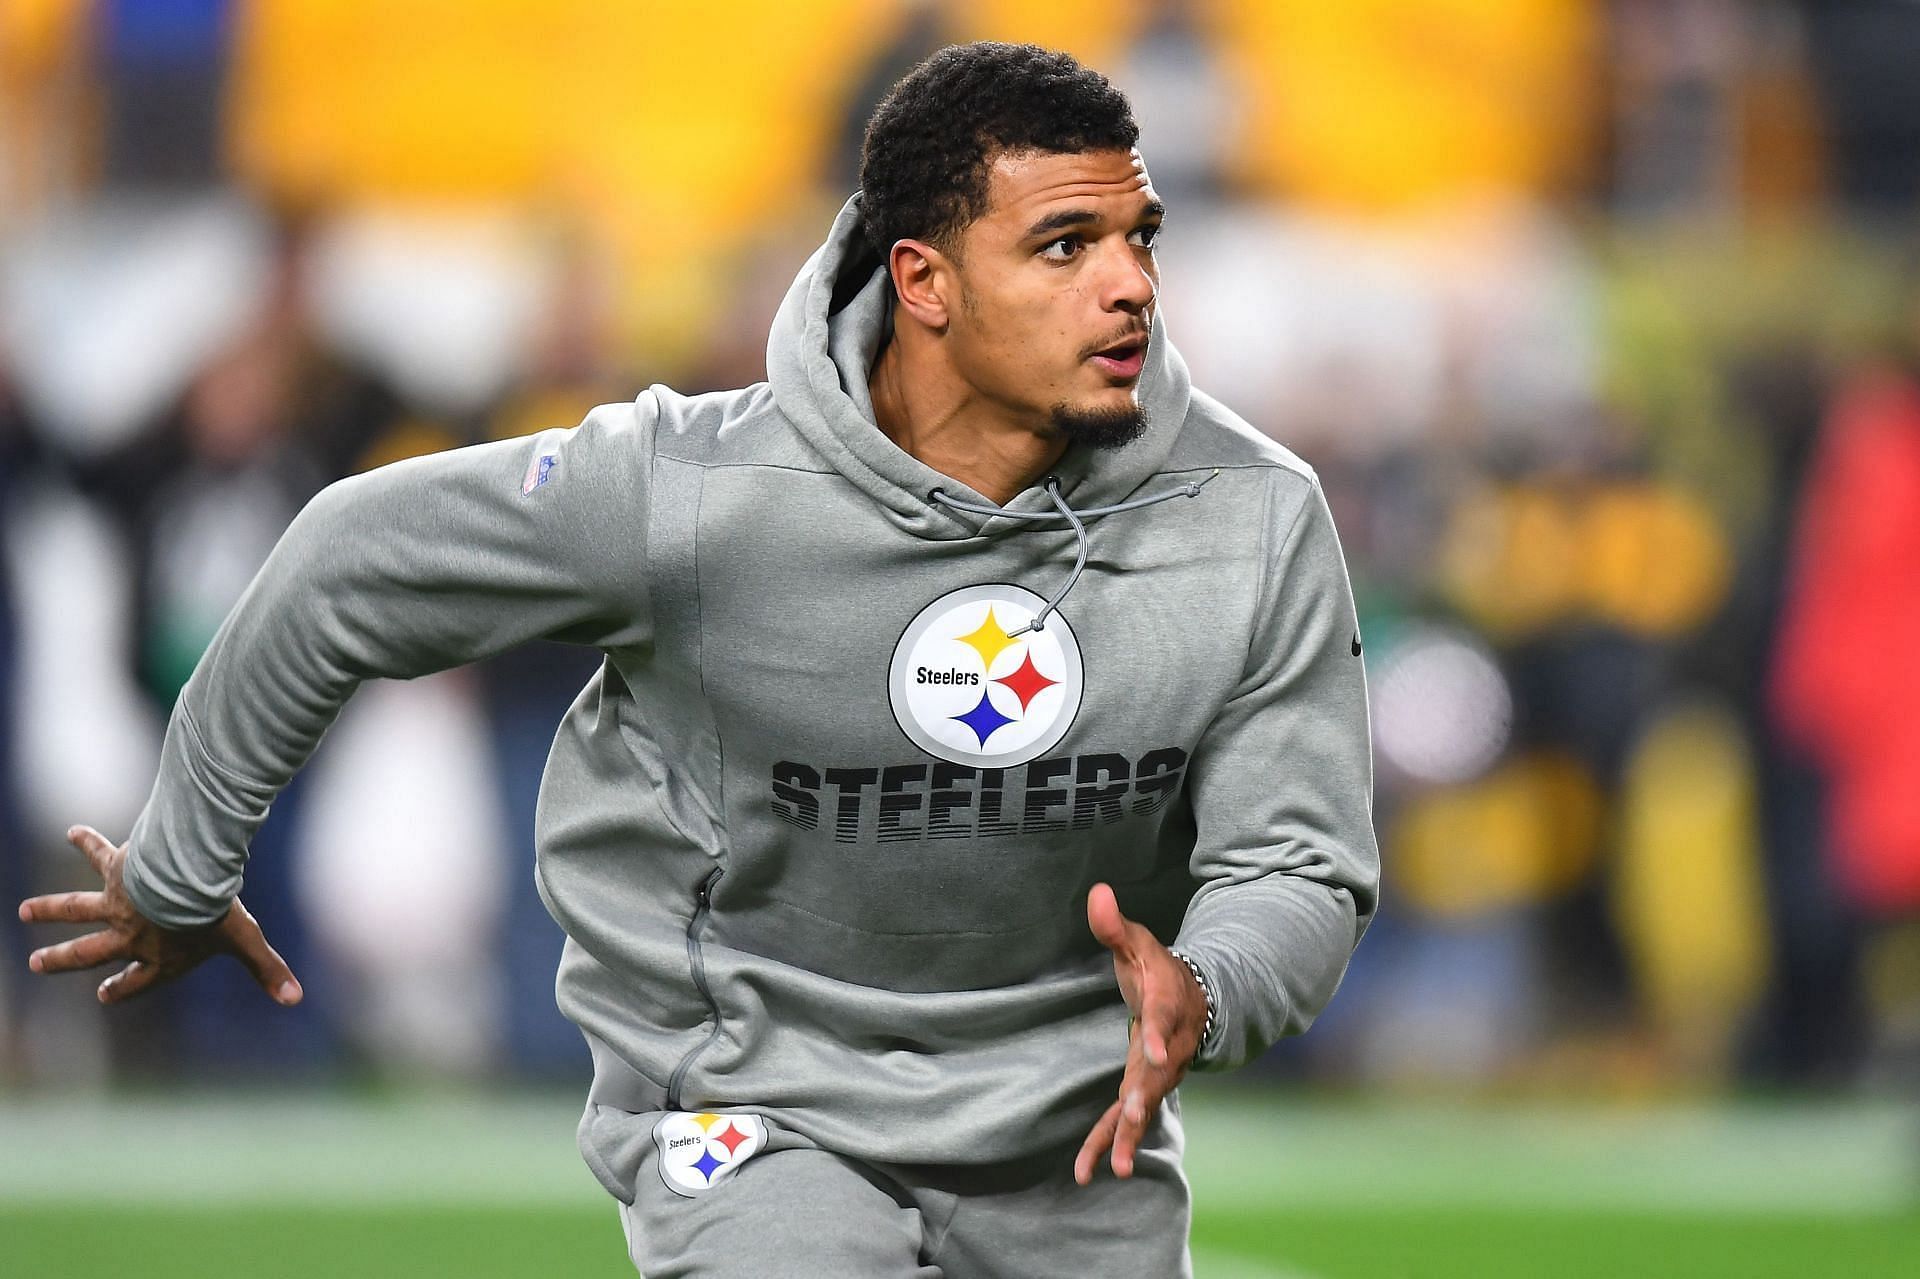 Minkah Fitzpatrick injury update: Latest on Steelers DB after setback vs. Jaguars